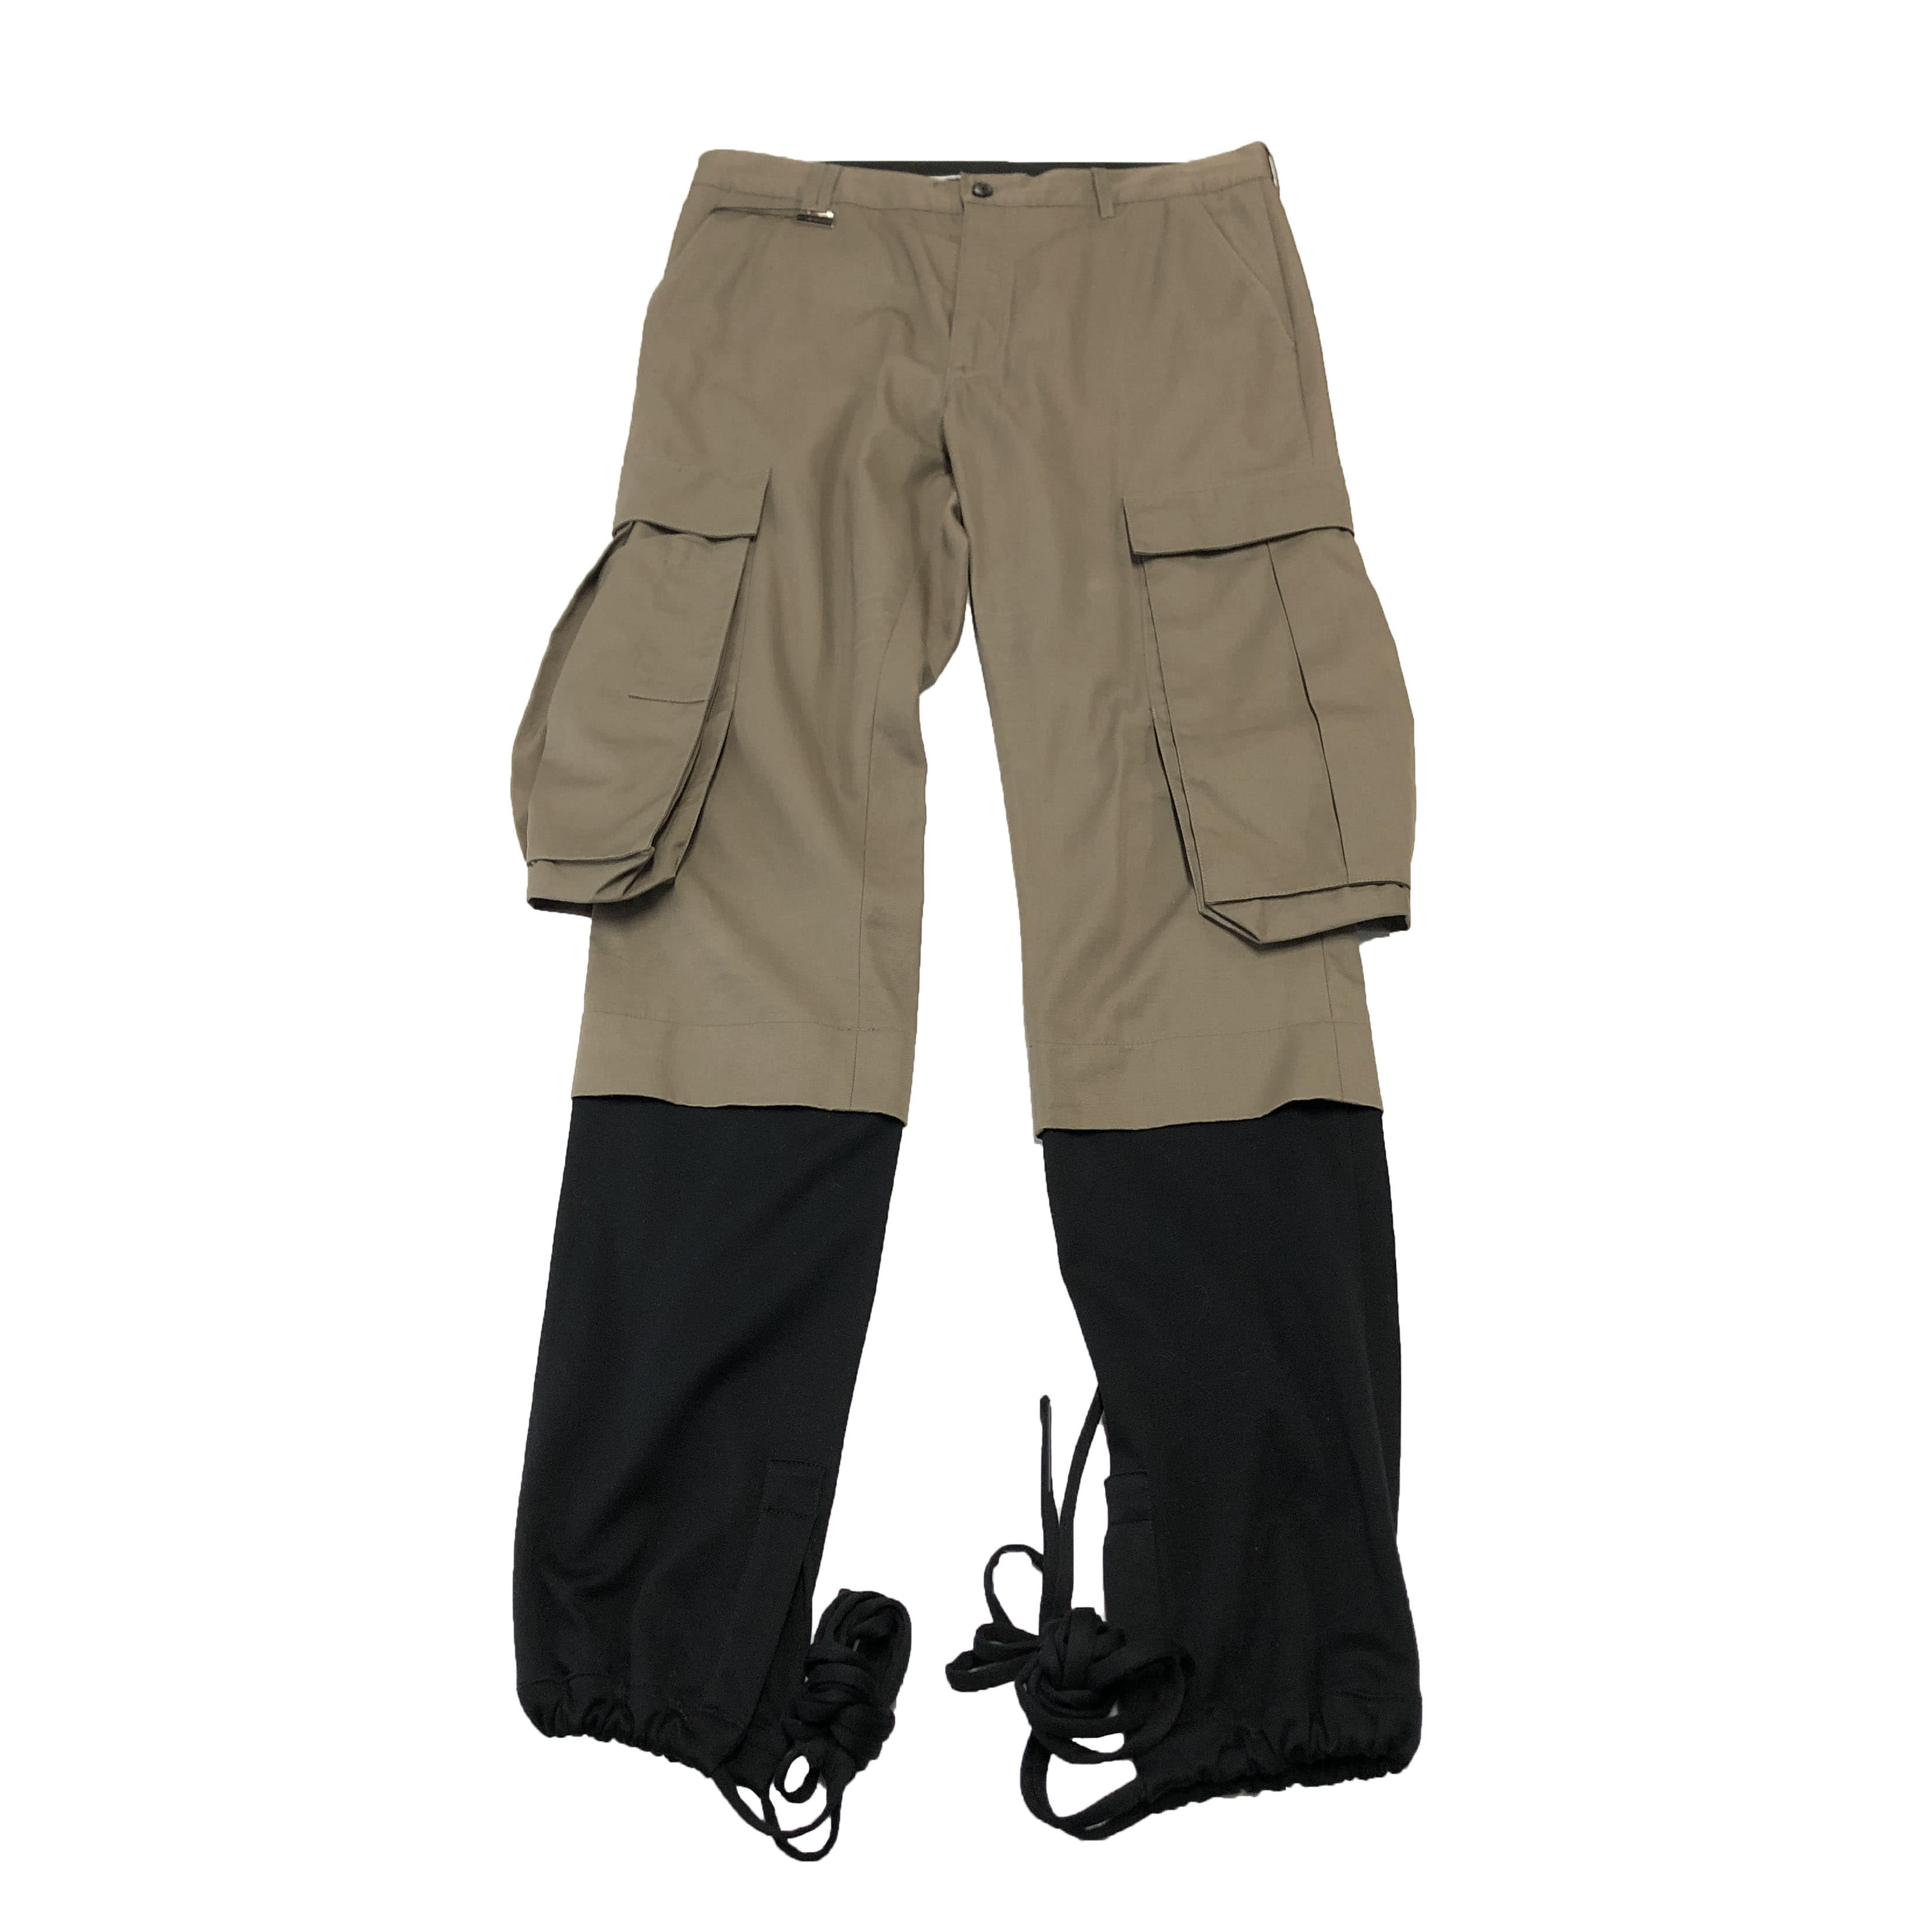 [Kris Van Assche] Khaki &amp; Black Cargo Track Pants - Size 48